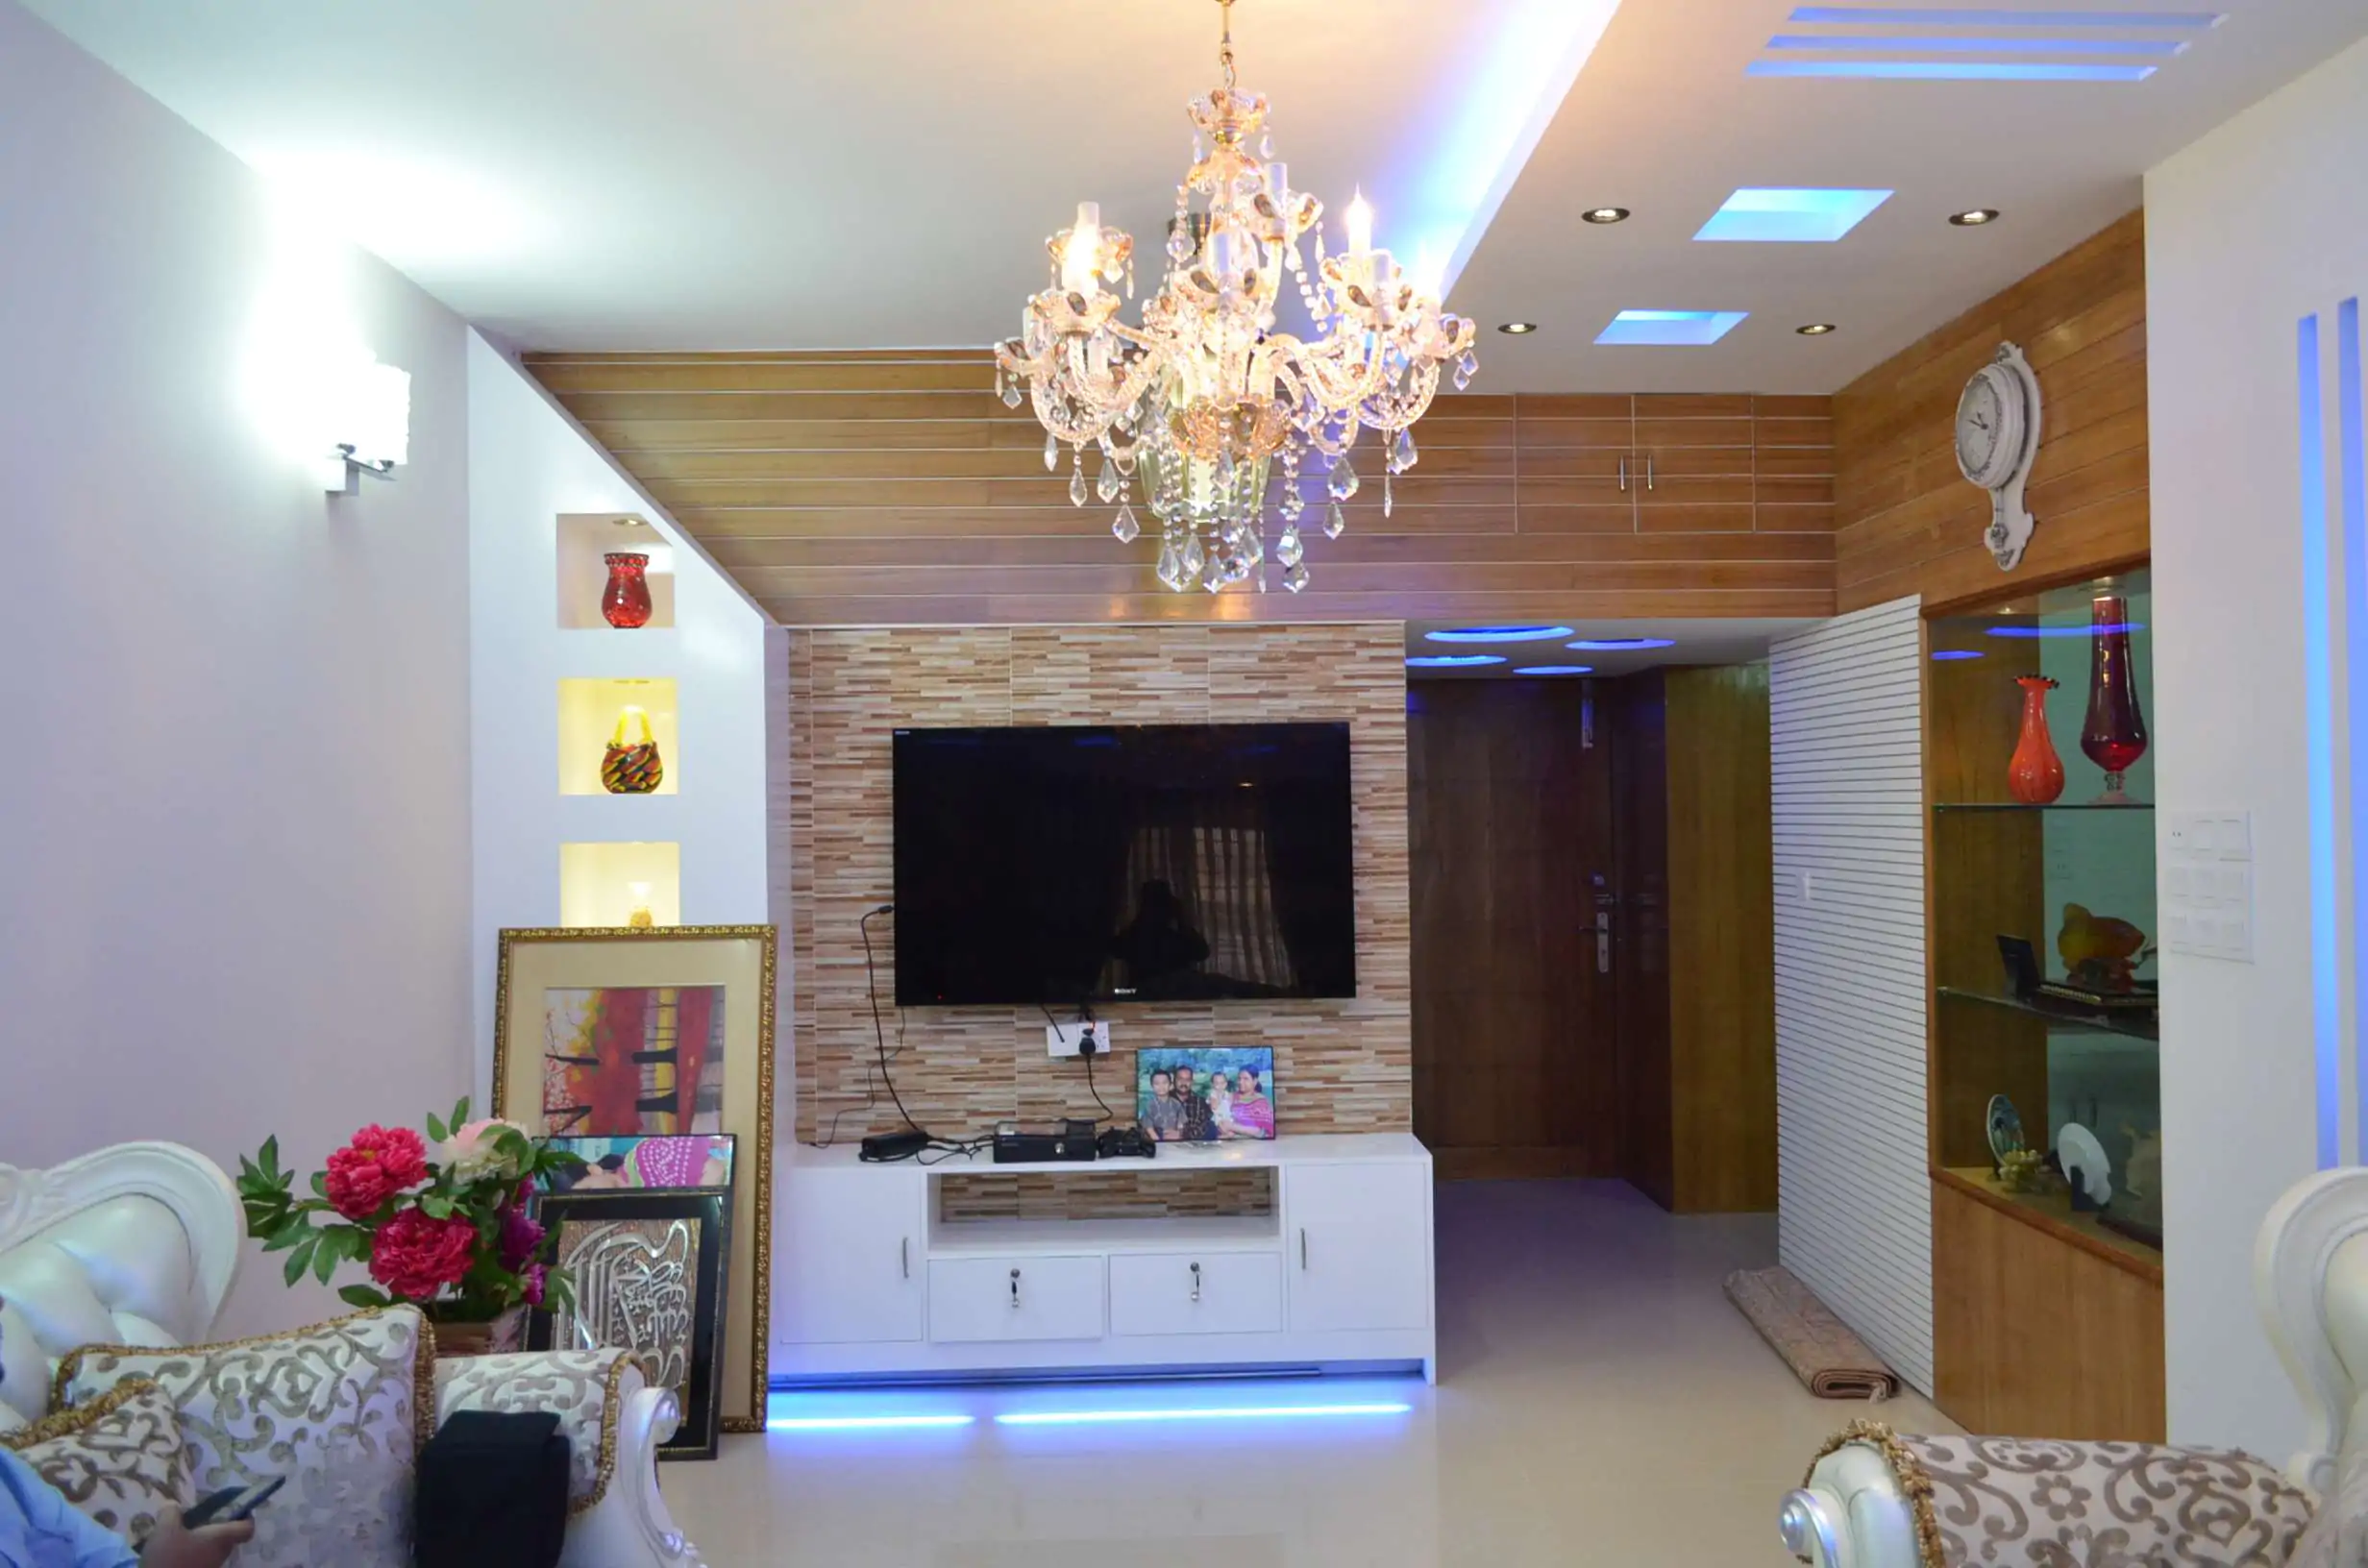 Masud Alam Dhanmondi Complete Project Drawing Room Interior Design (3)